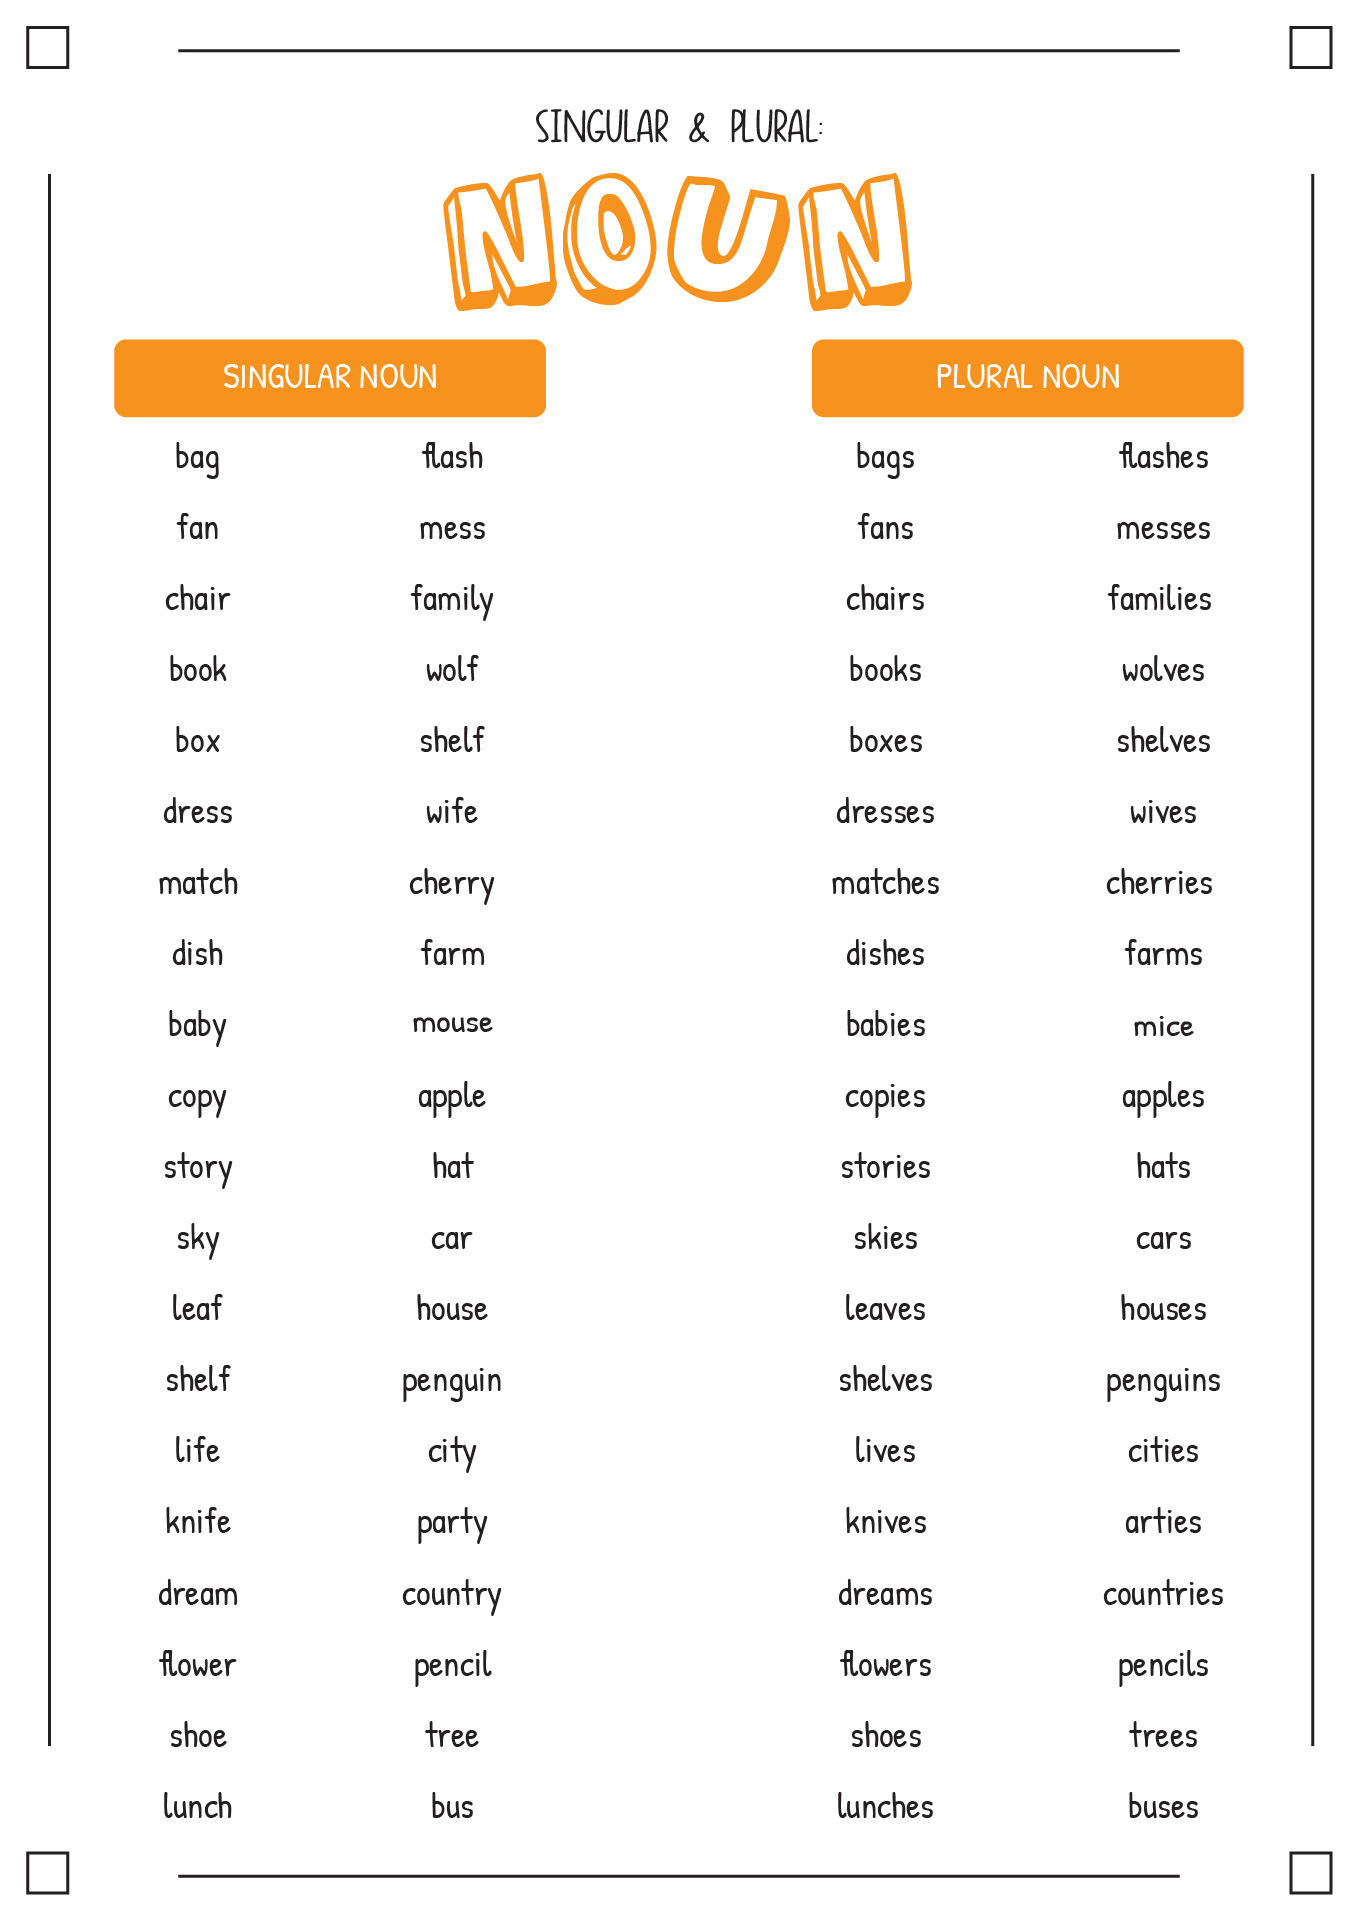 Singular and Plural Noun Chart